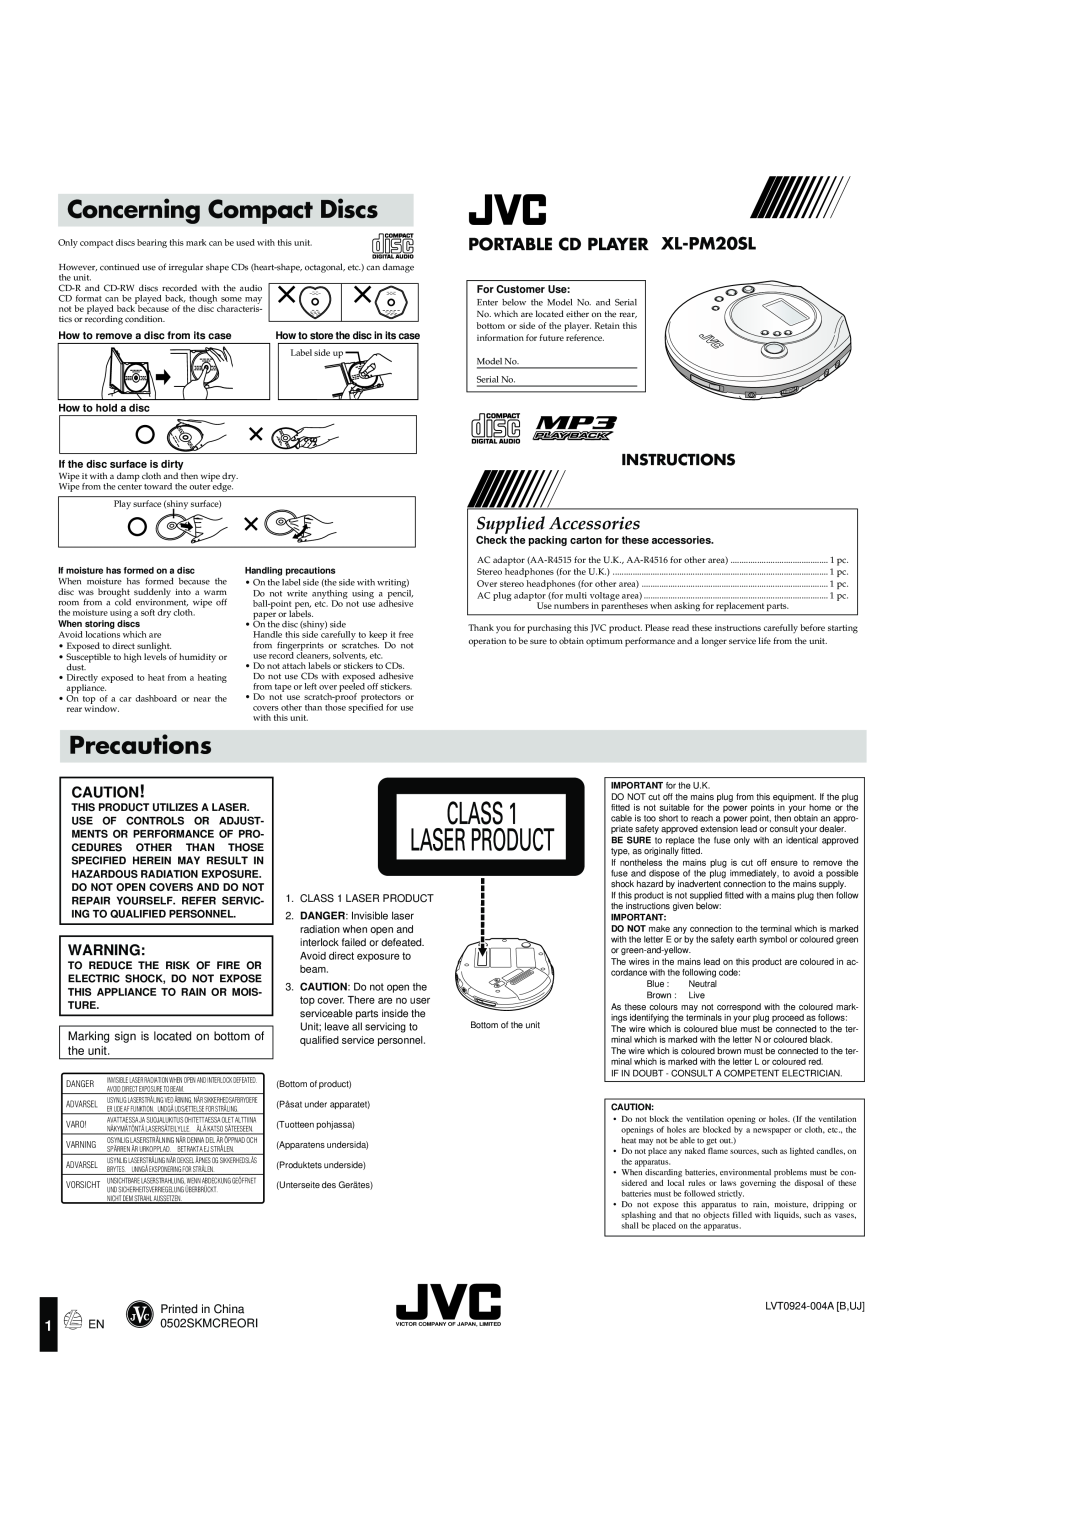 JVC manual Concerning Compact Discs, Precautions, 0502SKMCREORI, Supplied Accessories, PORTABLE CD PLAYER XL-PM20SL 